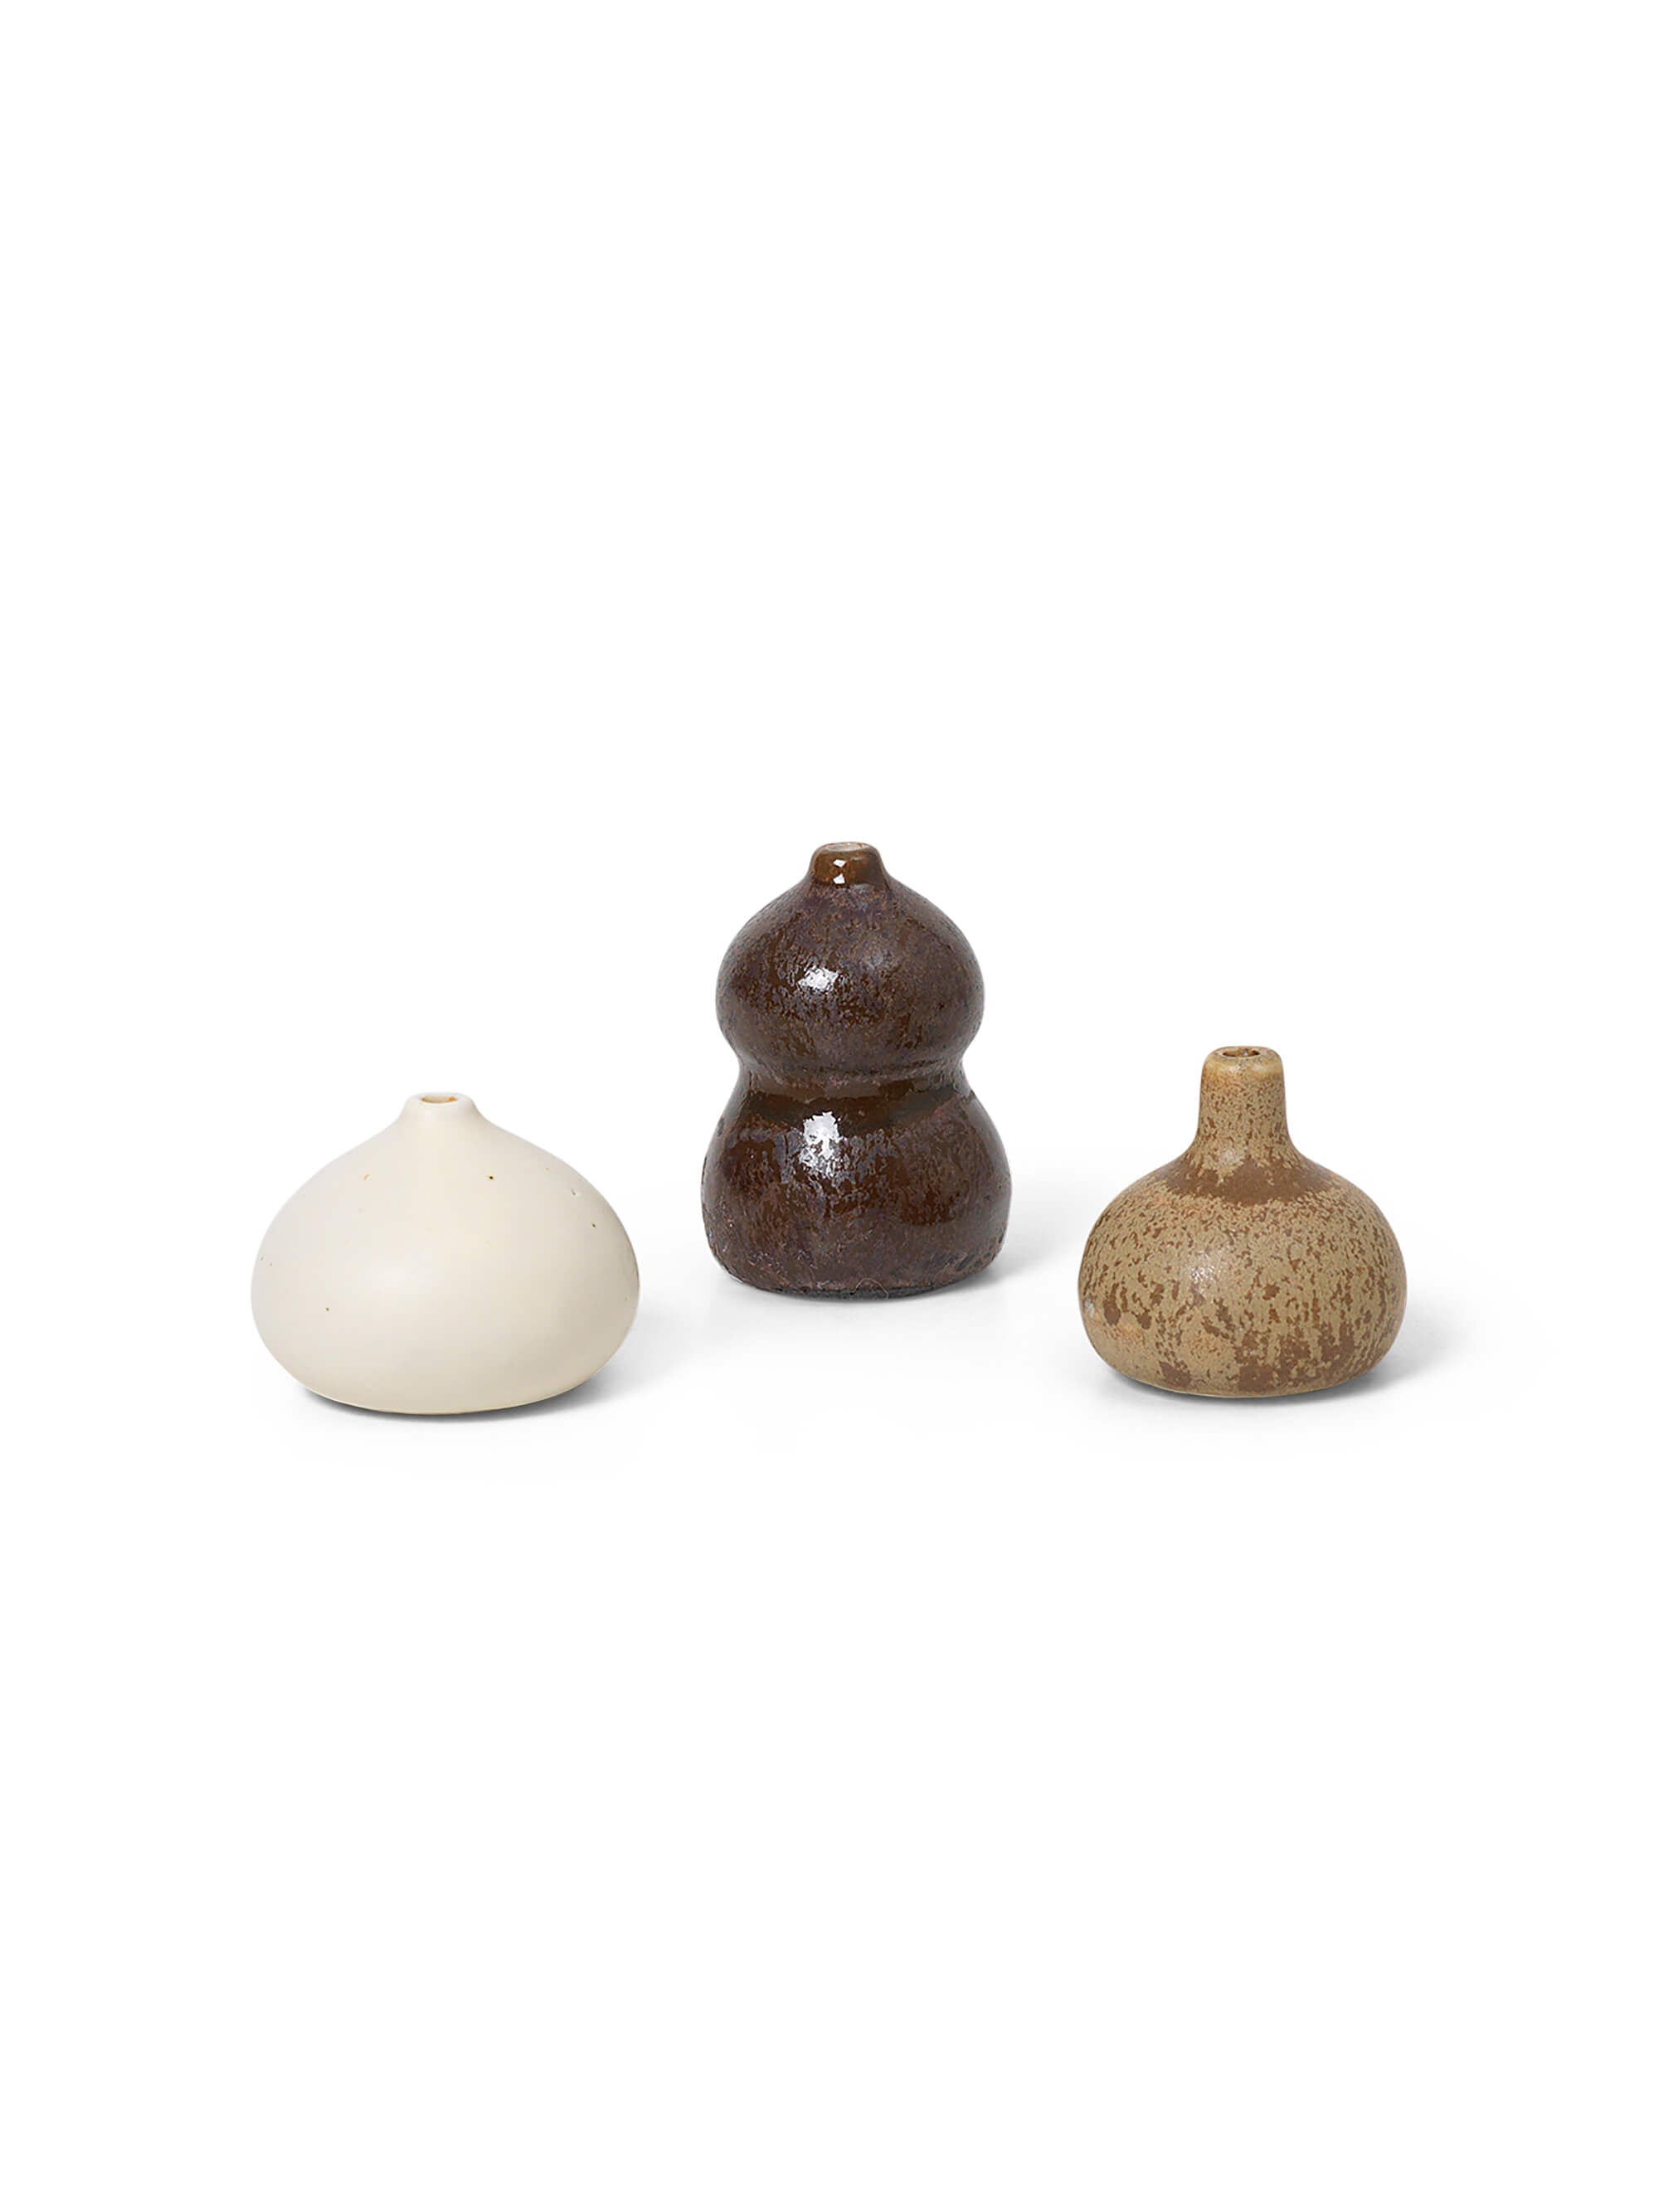 Komo Mini Vases | Set of 3 | by ferm Living - Lifestory - ferm LIVING